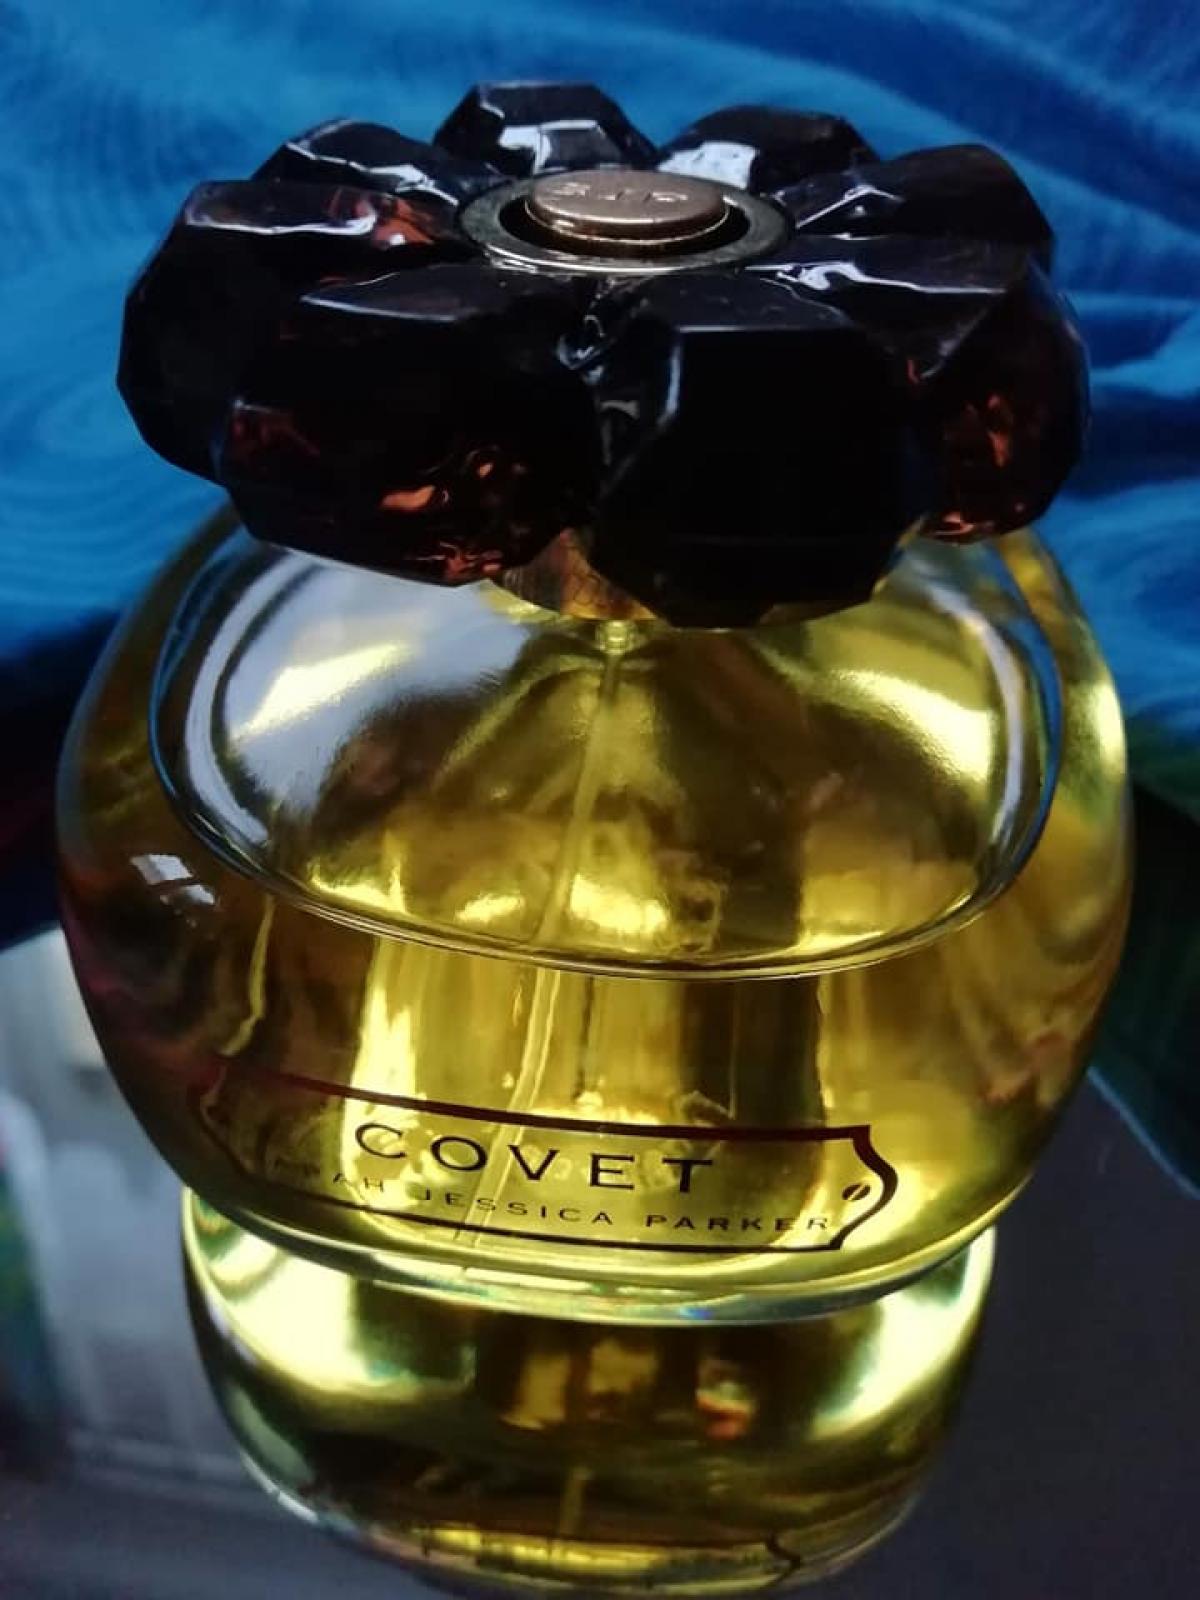 Covet Sarah Jessica Parker perfume - a fragrance for women 2007